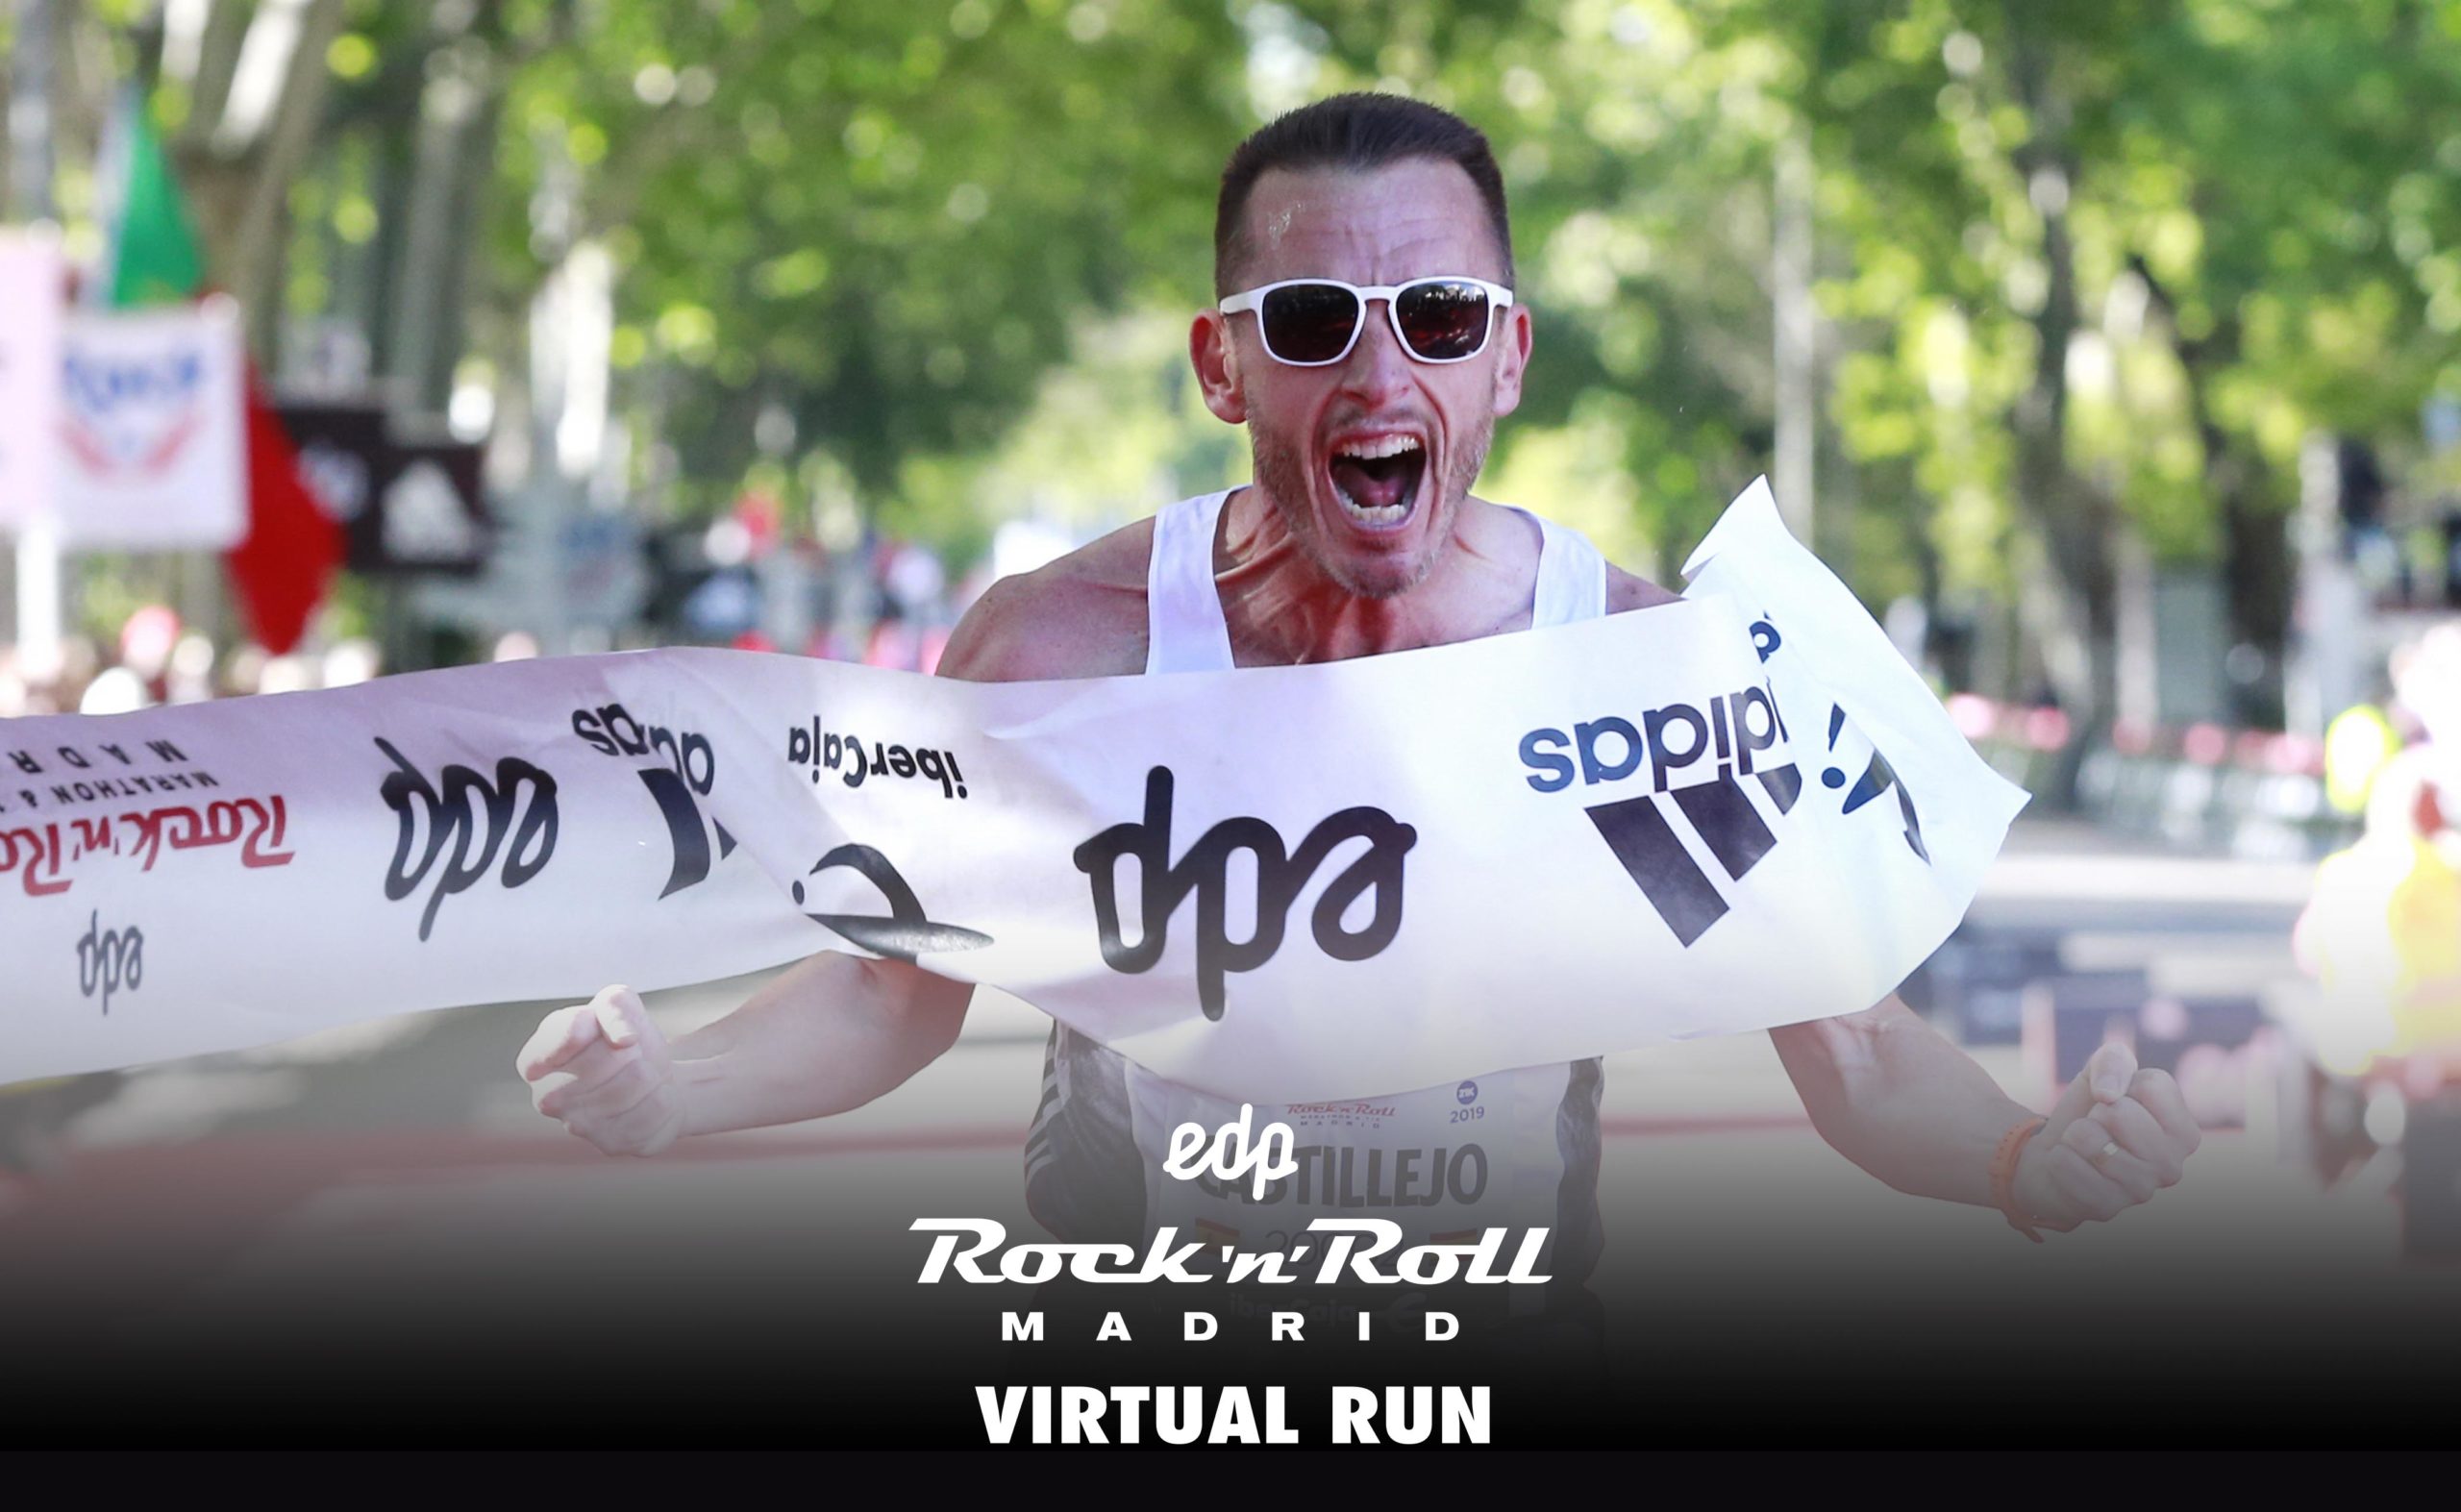 ¡La élite se suma a la EDP Rock ‘n’ Roll Madrid Virtual Run!